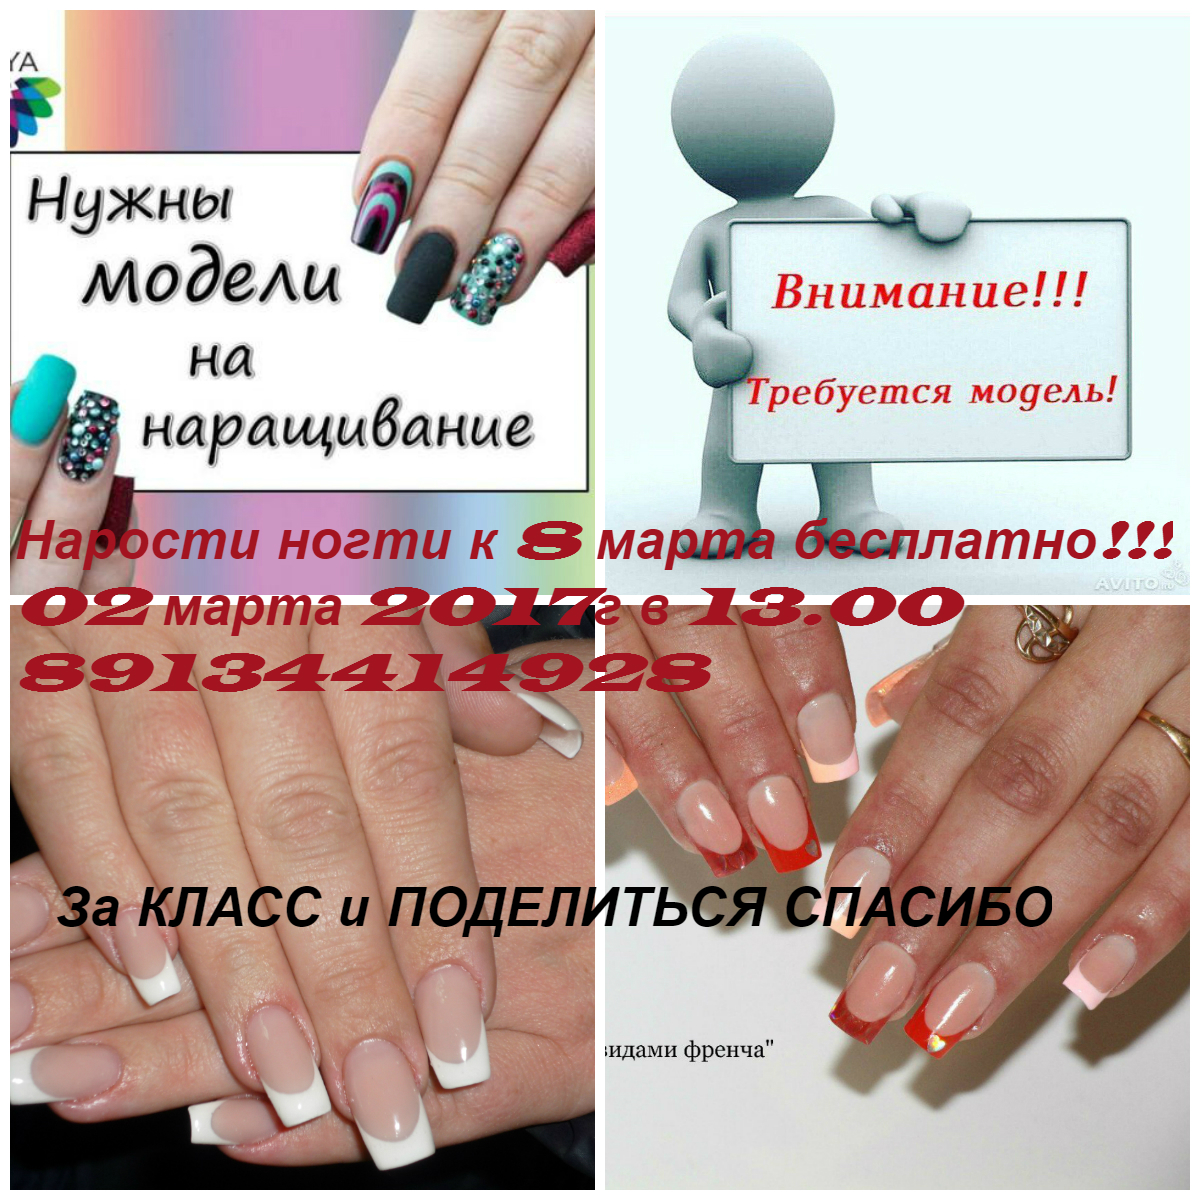 Саяногорск Инфо - collage1.jpg, Скачано: 137